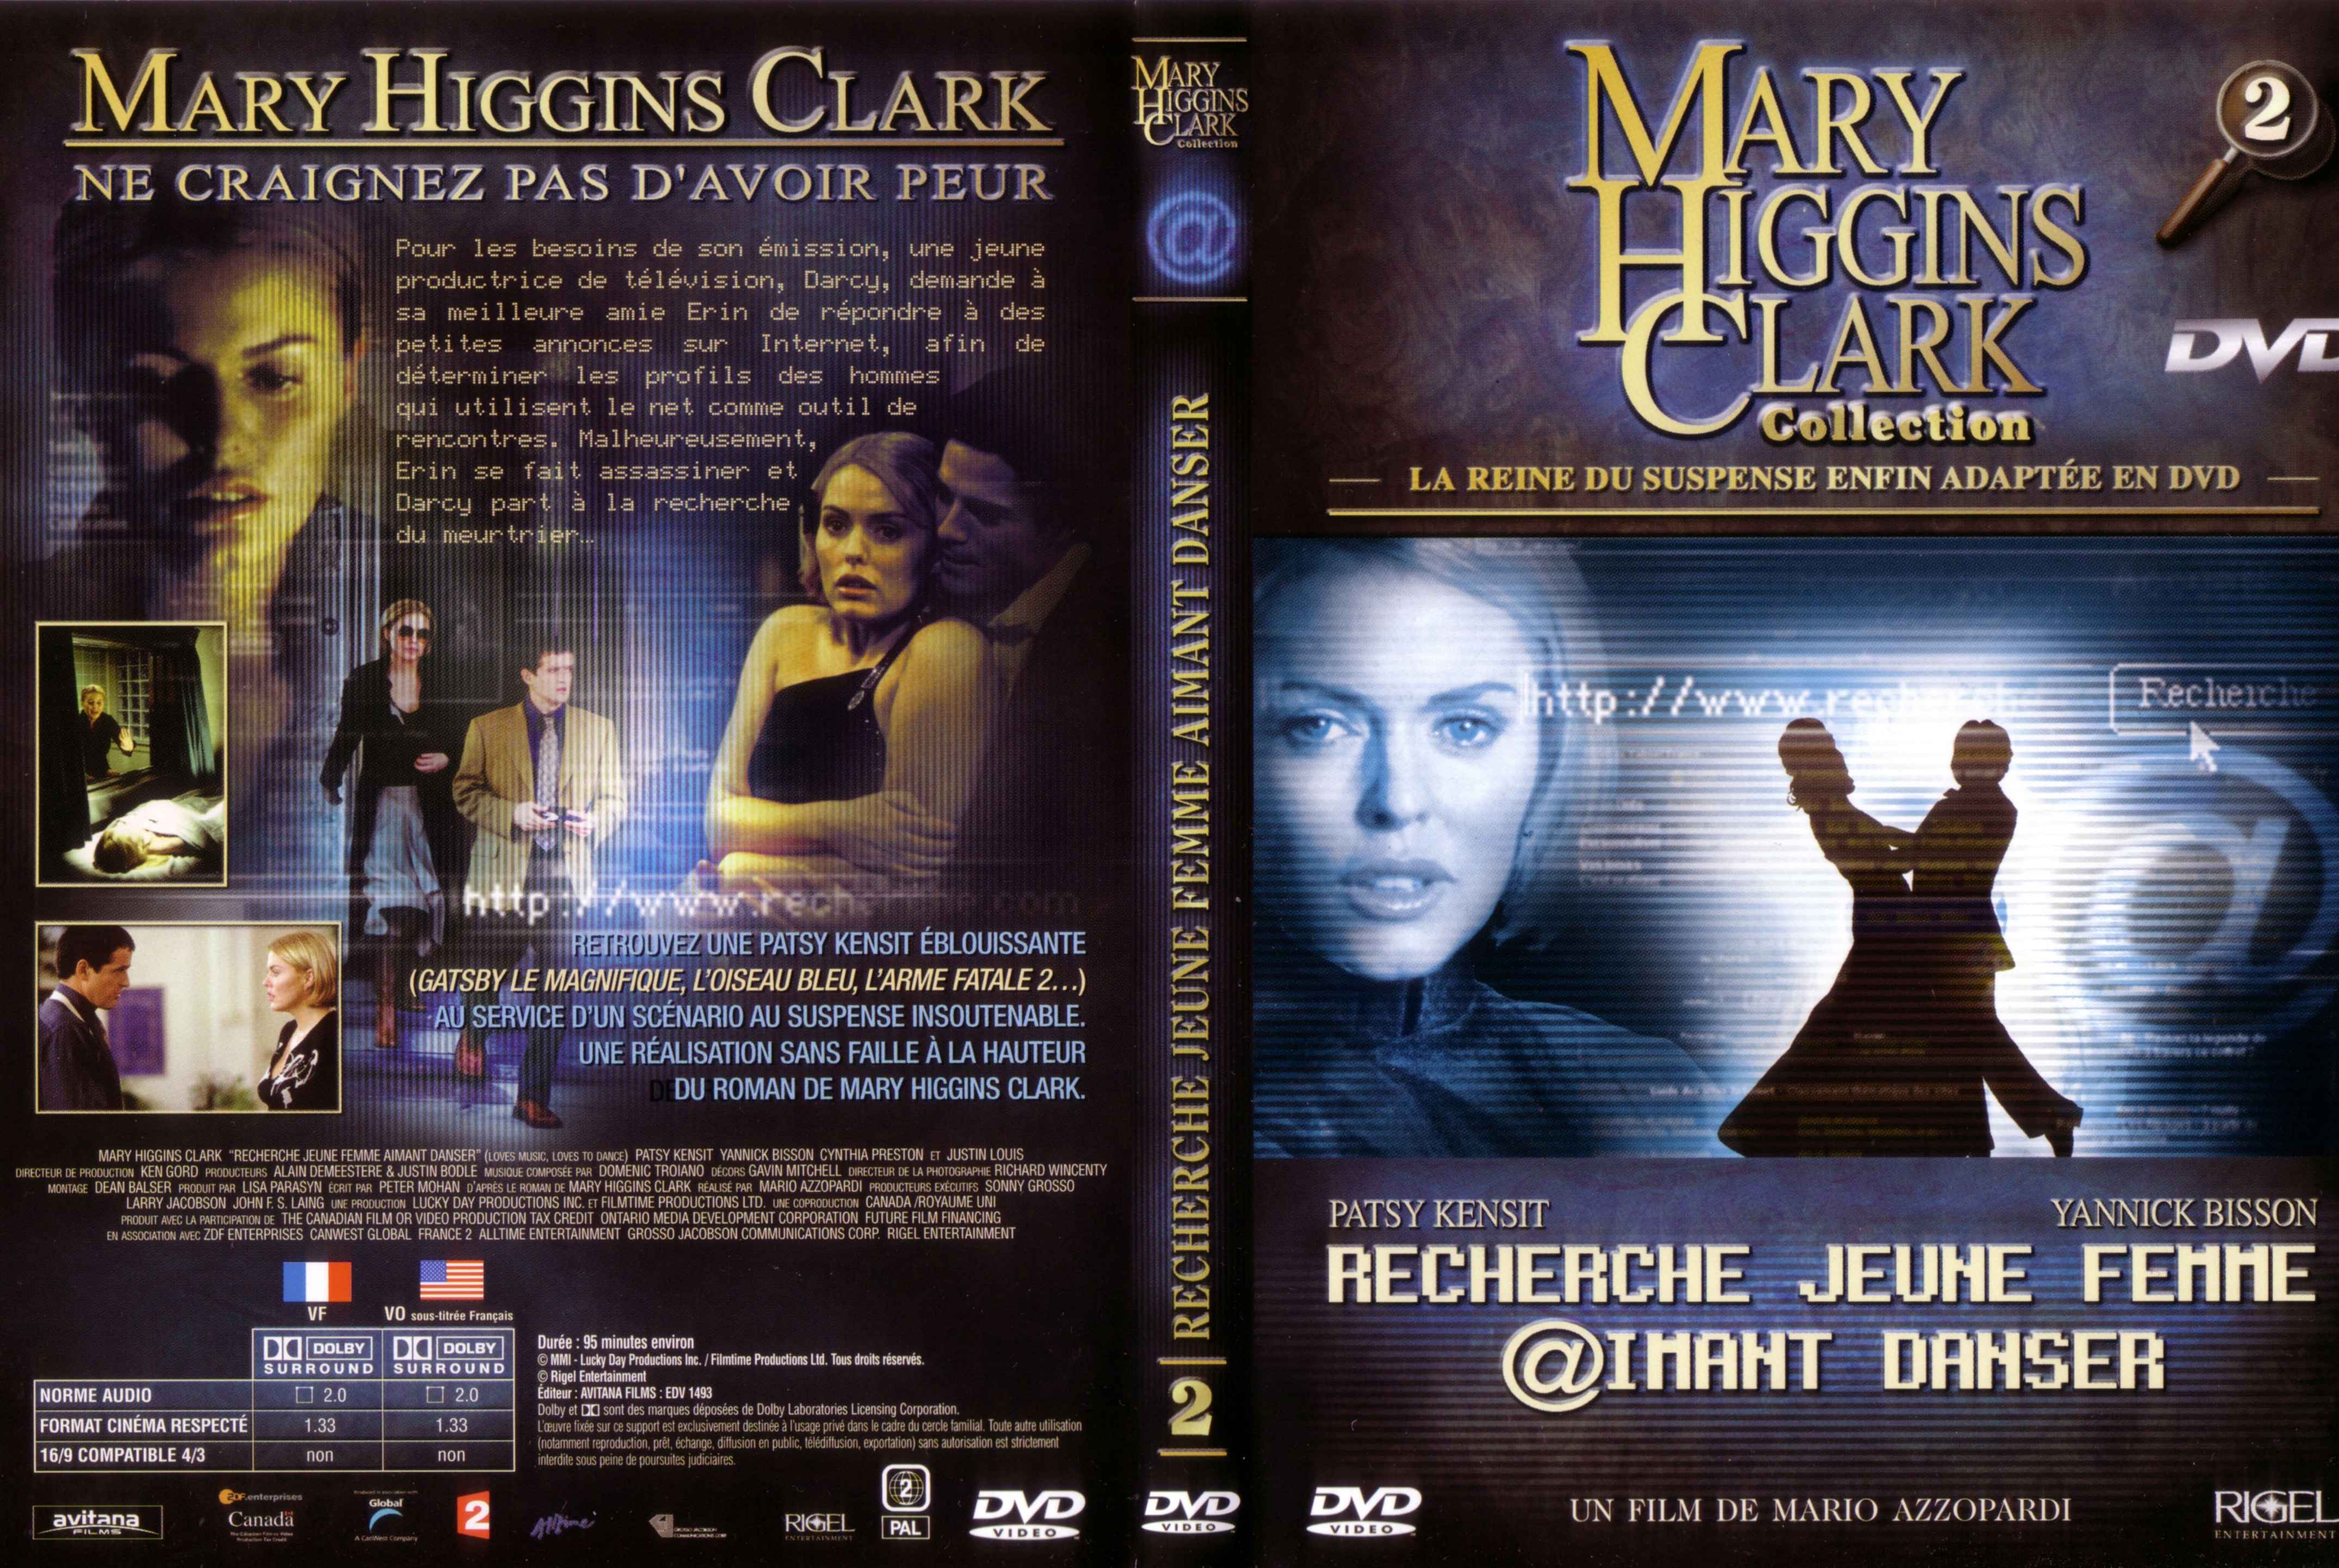 Jaquette DVD de Mary Higgins Clark vol 02 - recherche jeune femme @imant danser ...4299 x 2882